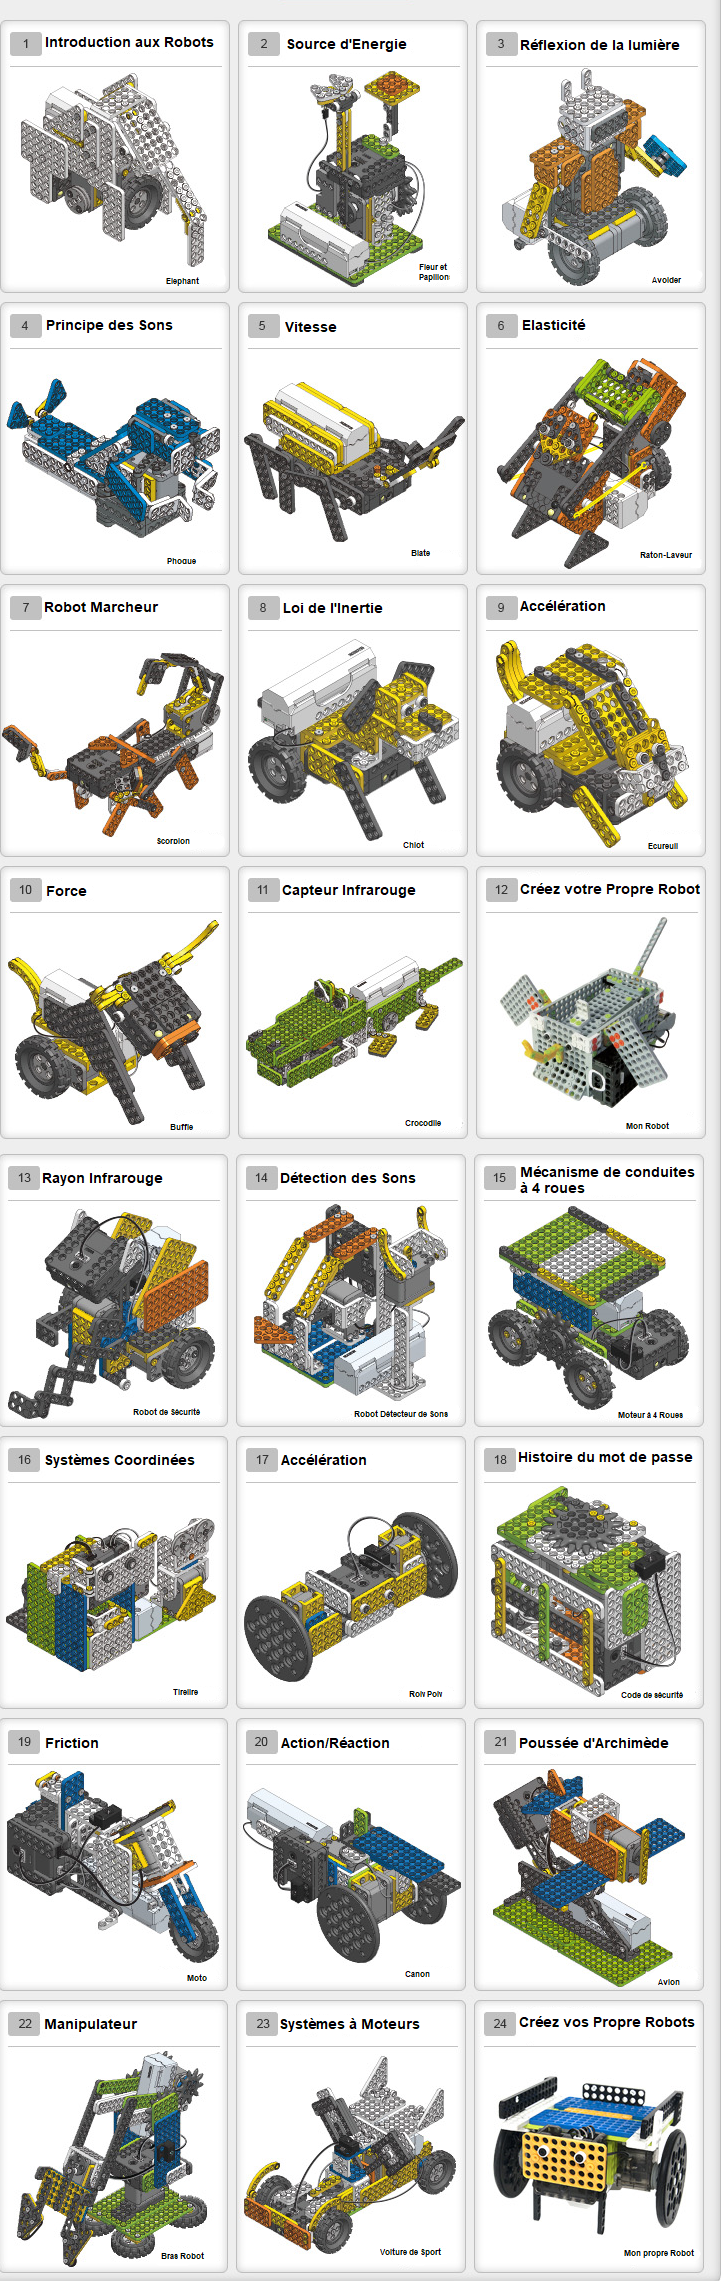 School kit Robotis Dream II : example of robots